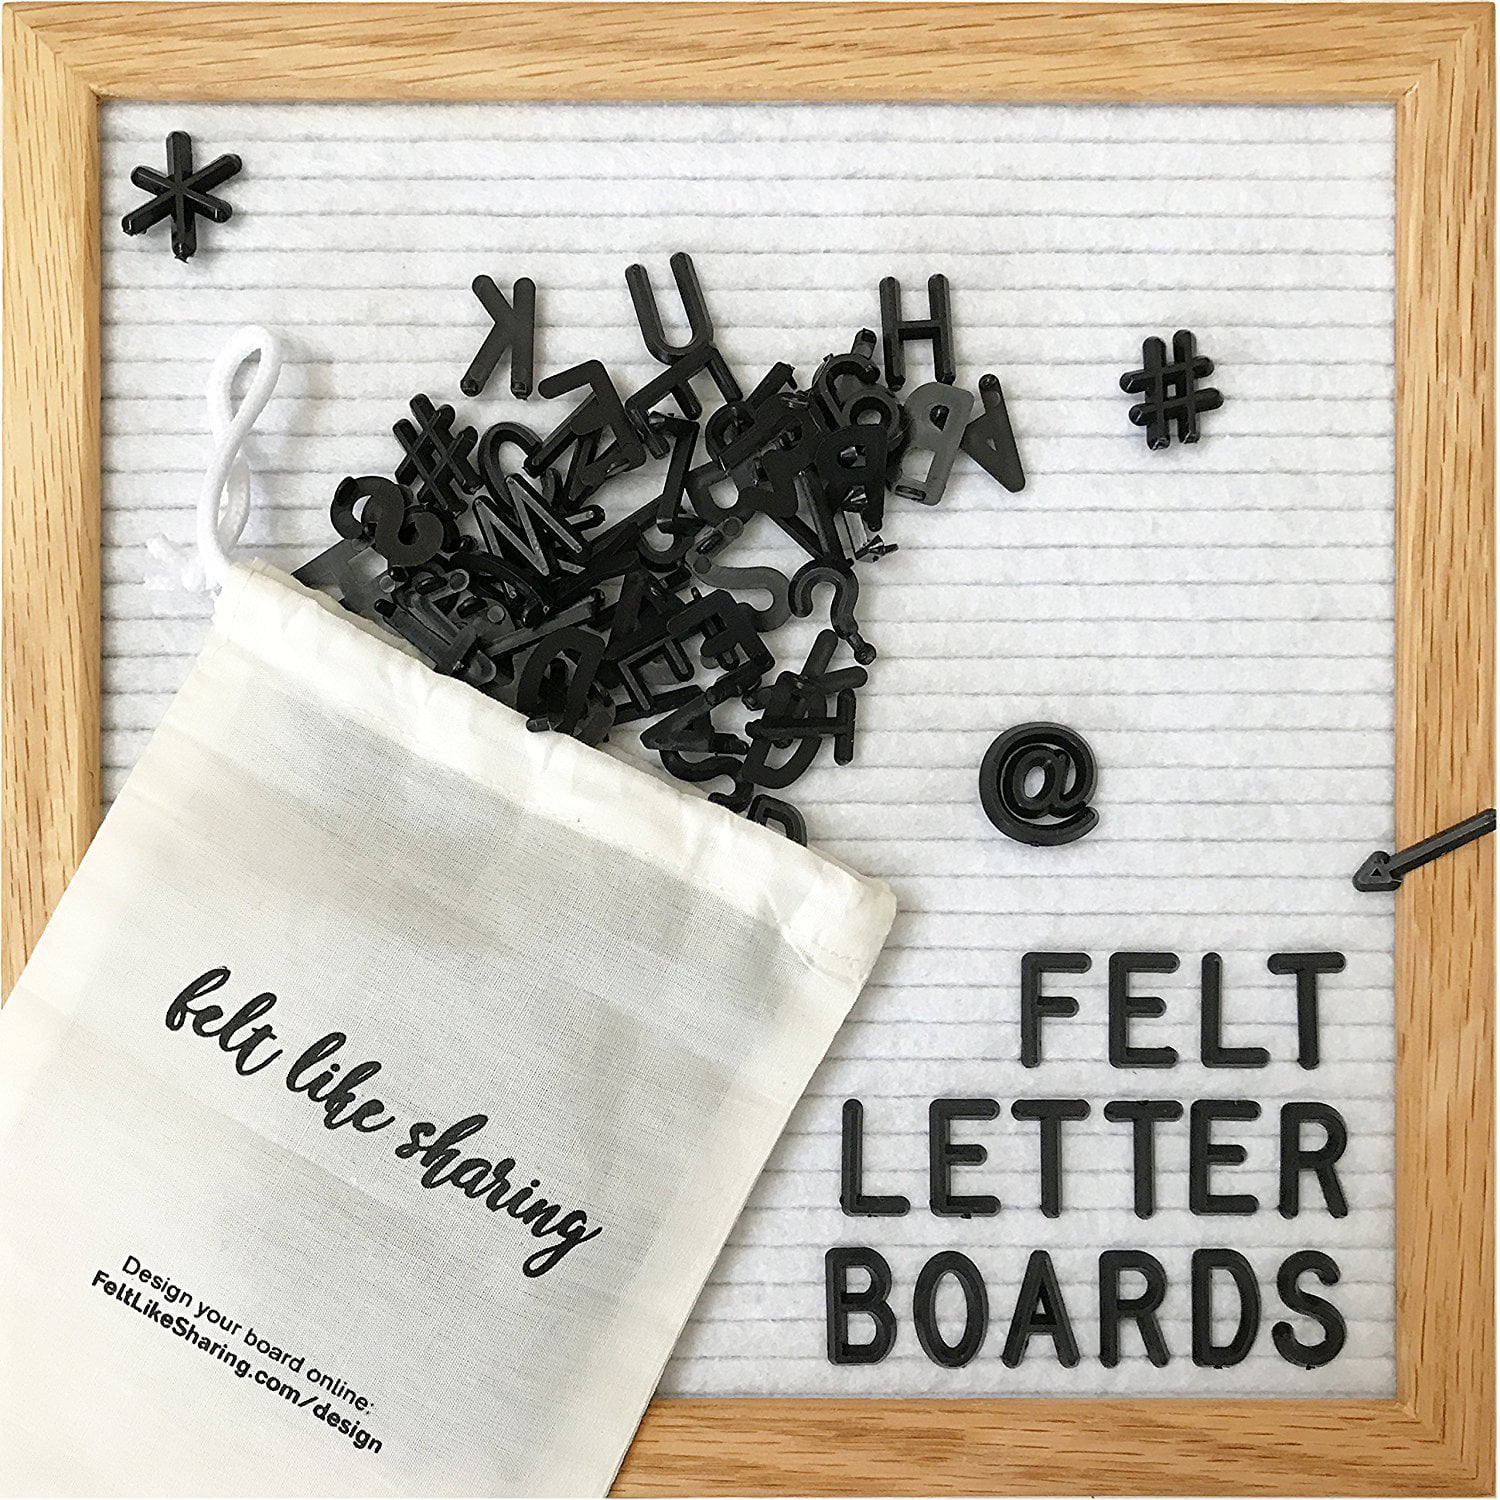 10x10 inch Oak Felt Board w/ 300 White Plastic Letters for Baby Pregnancy Announcement Office Holidays Wedding Gray Changeable Felt Letter Board w/Lights Birthday Graduation 